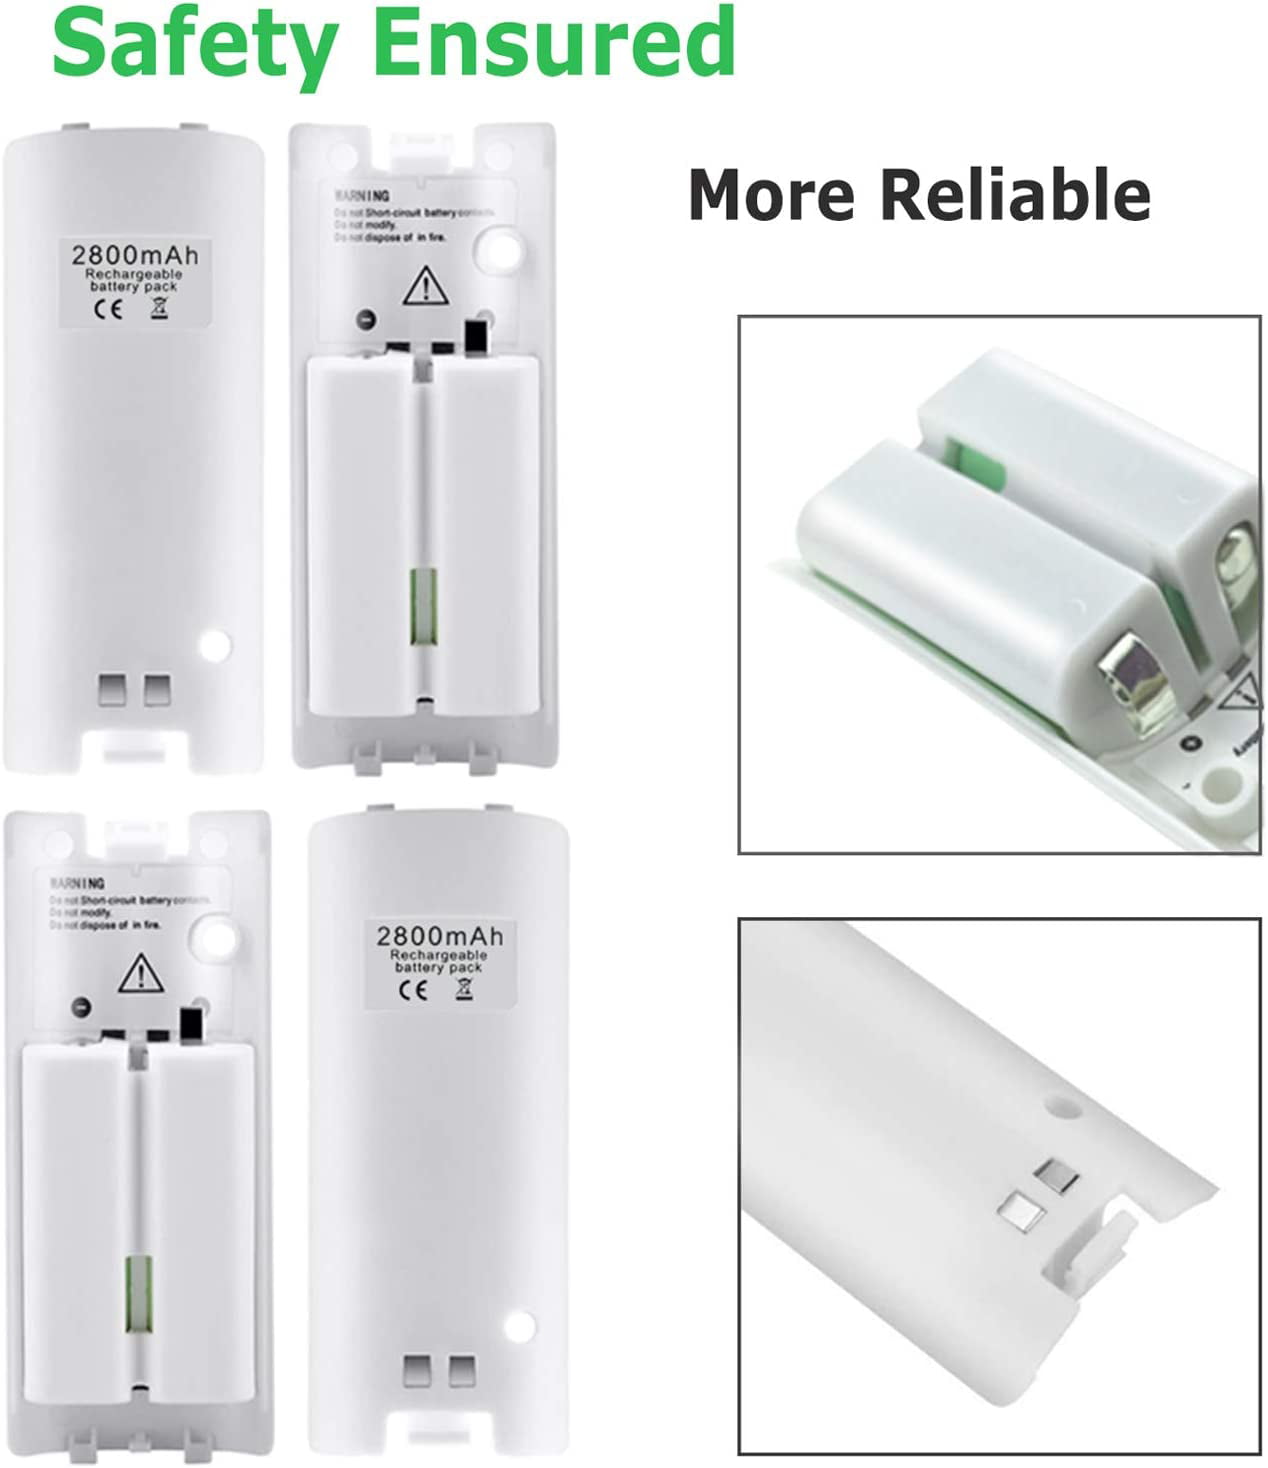 Kulannder 4 Pcs Wii Remote Batteries Rechargeable, 2800mAh High-Capacity  Rechargeable Batteries for Nintendo Wii/Wii U Remote Controller (White)